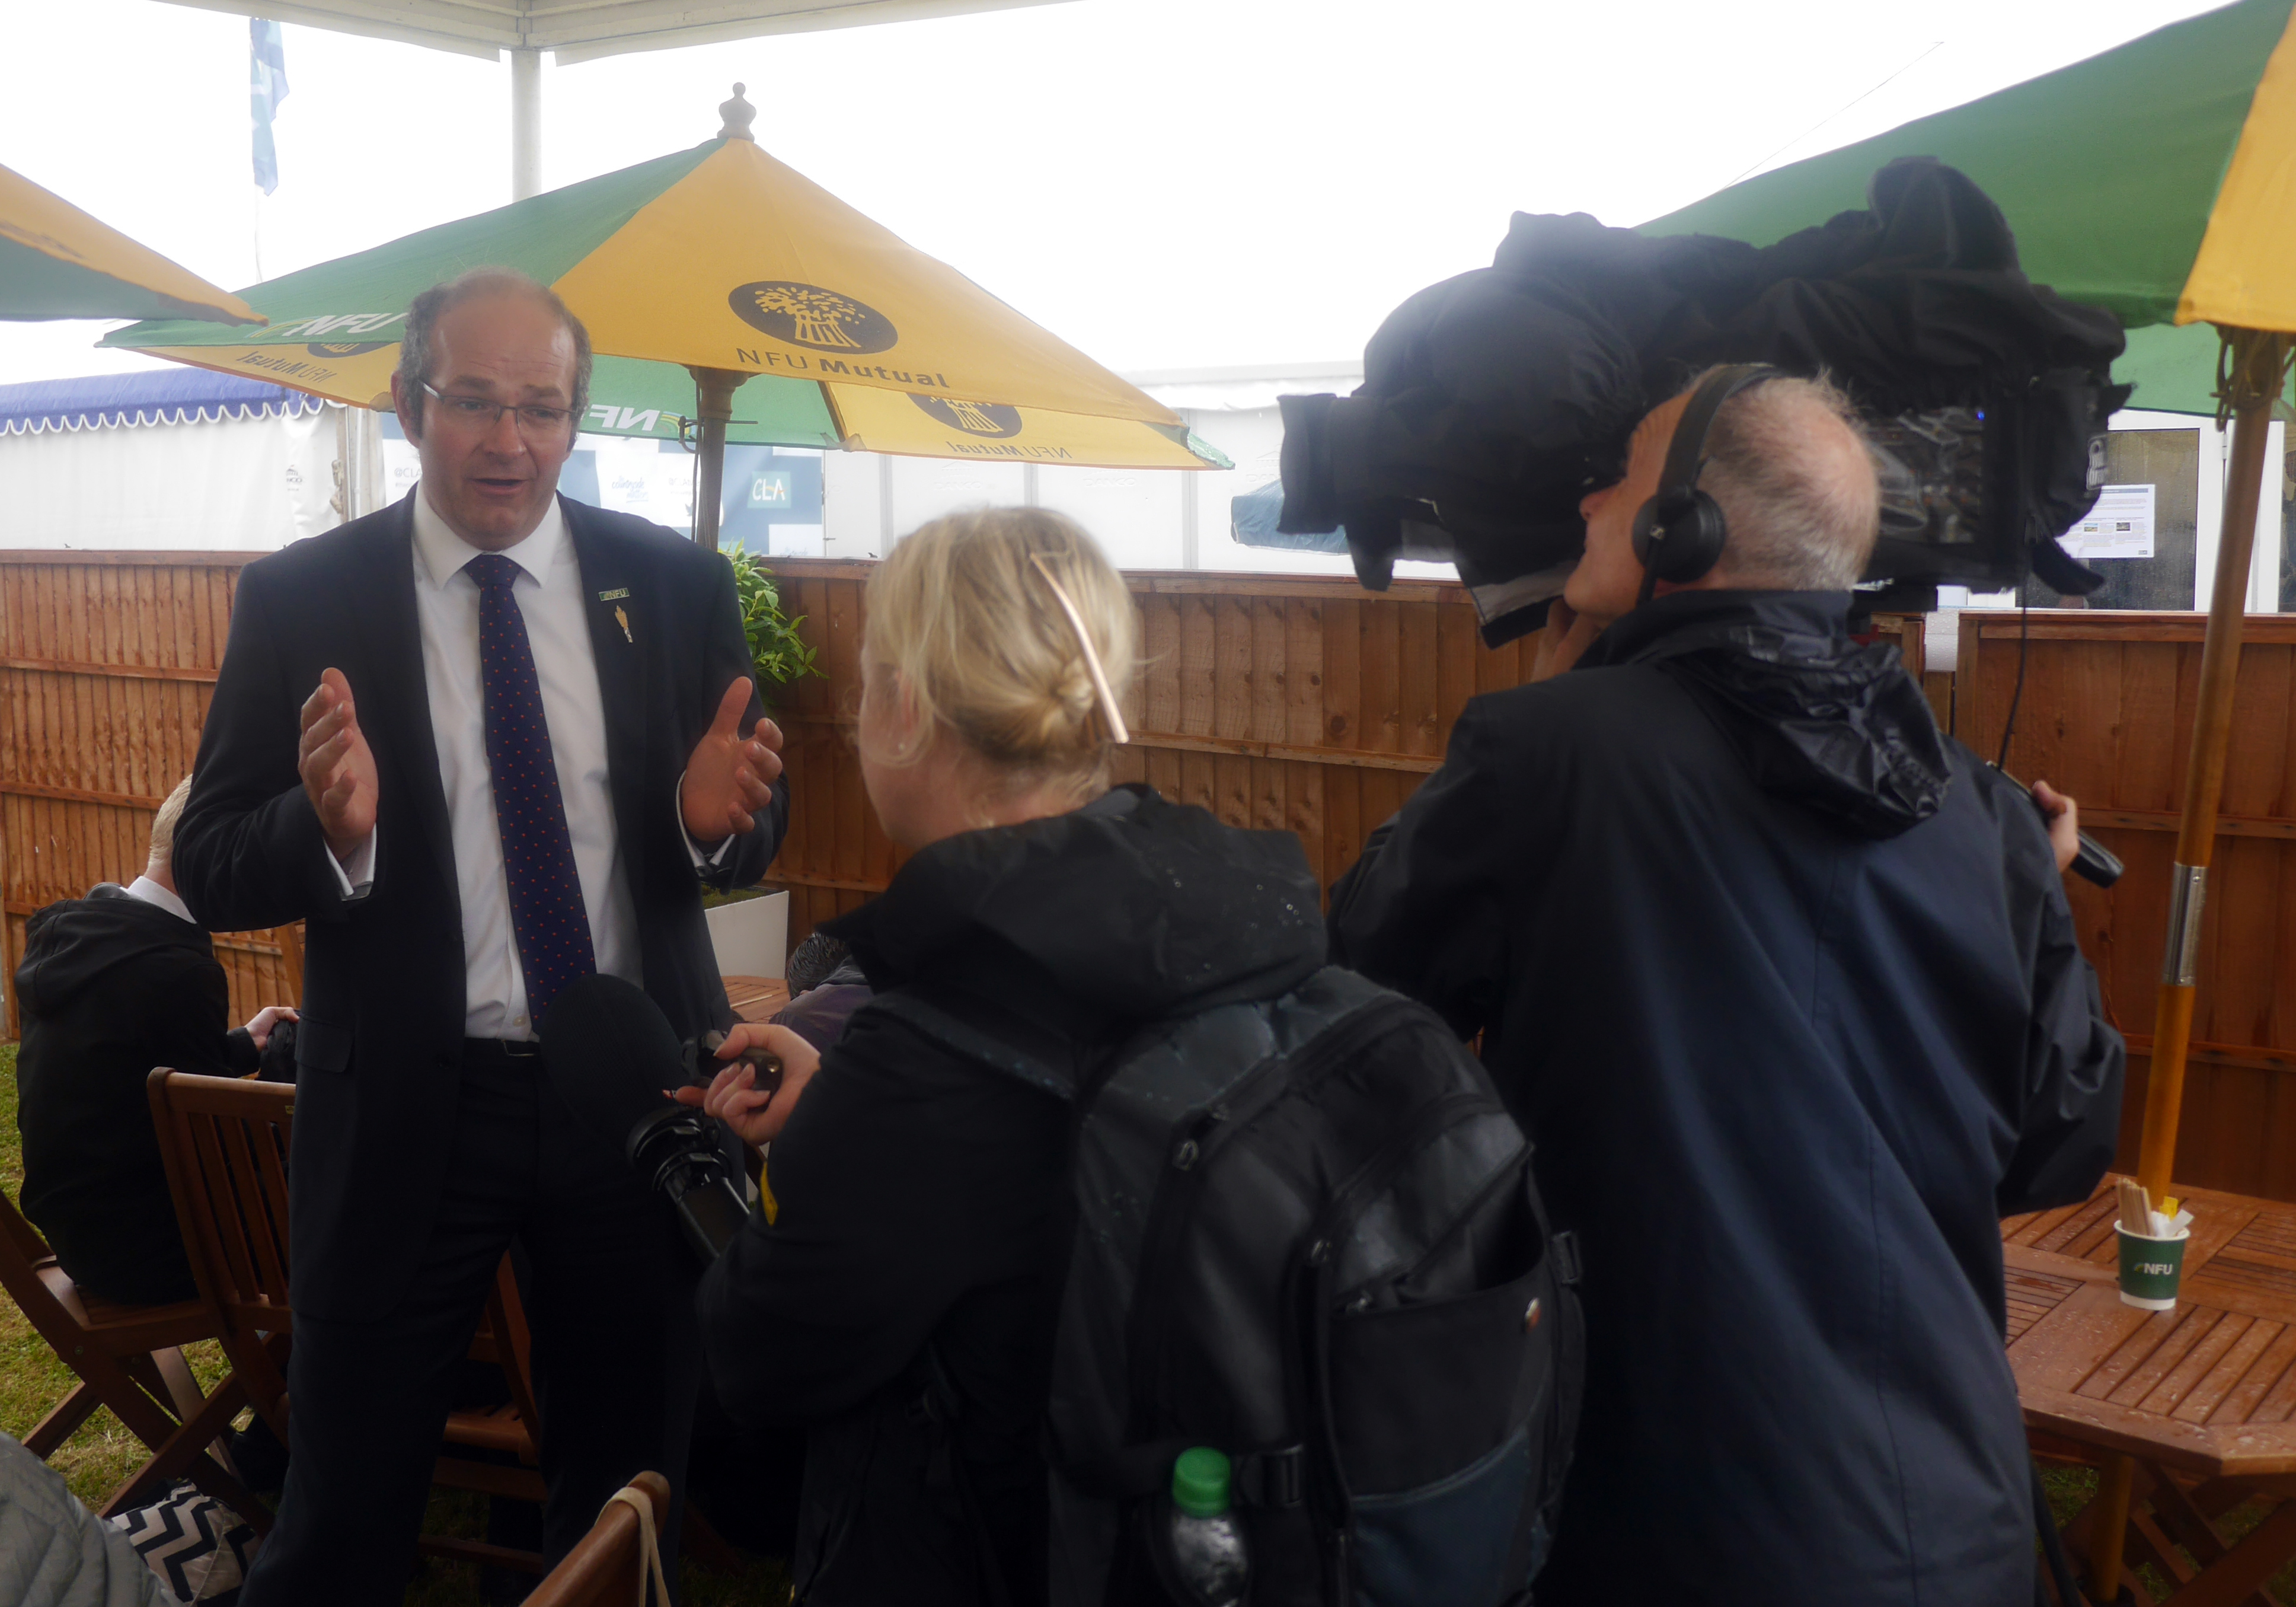 NFU Deputy President Tom Bradshaw is interviewed at the Royal Cornwall Show